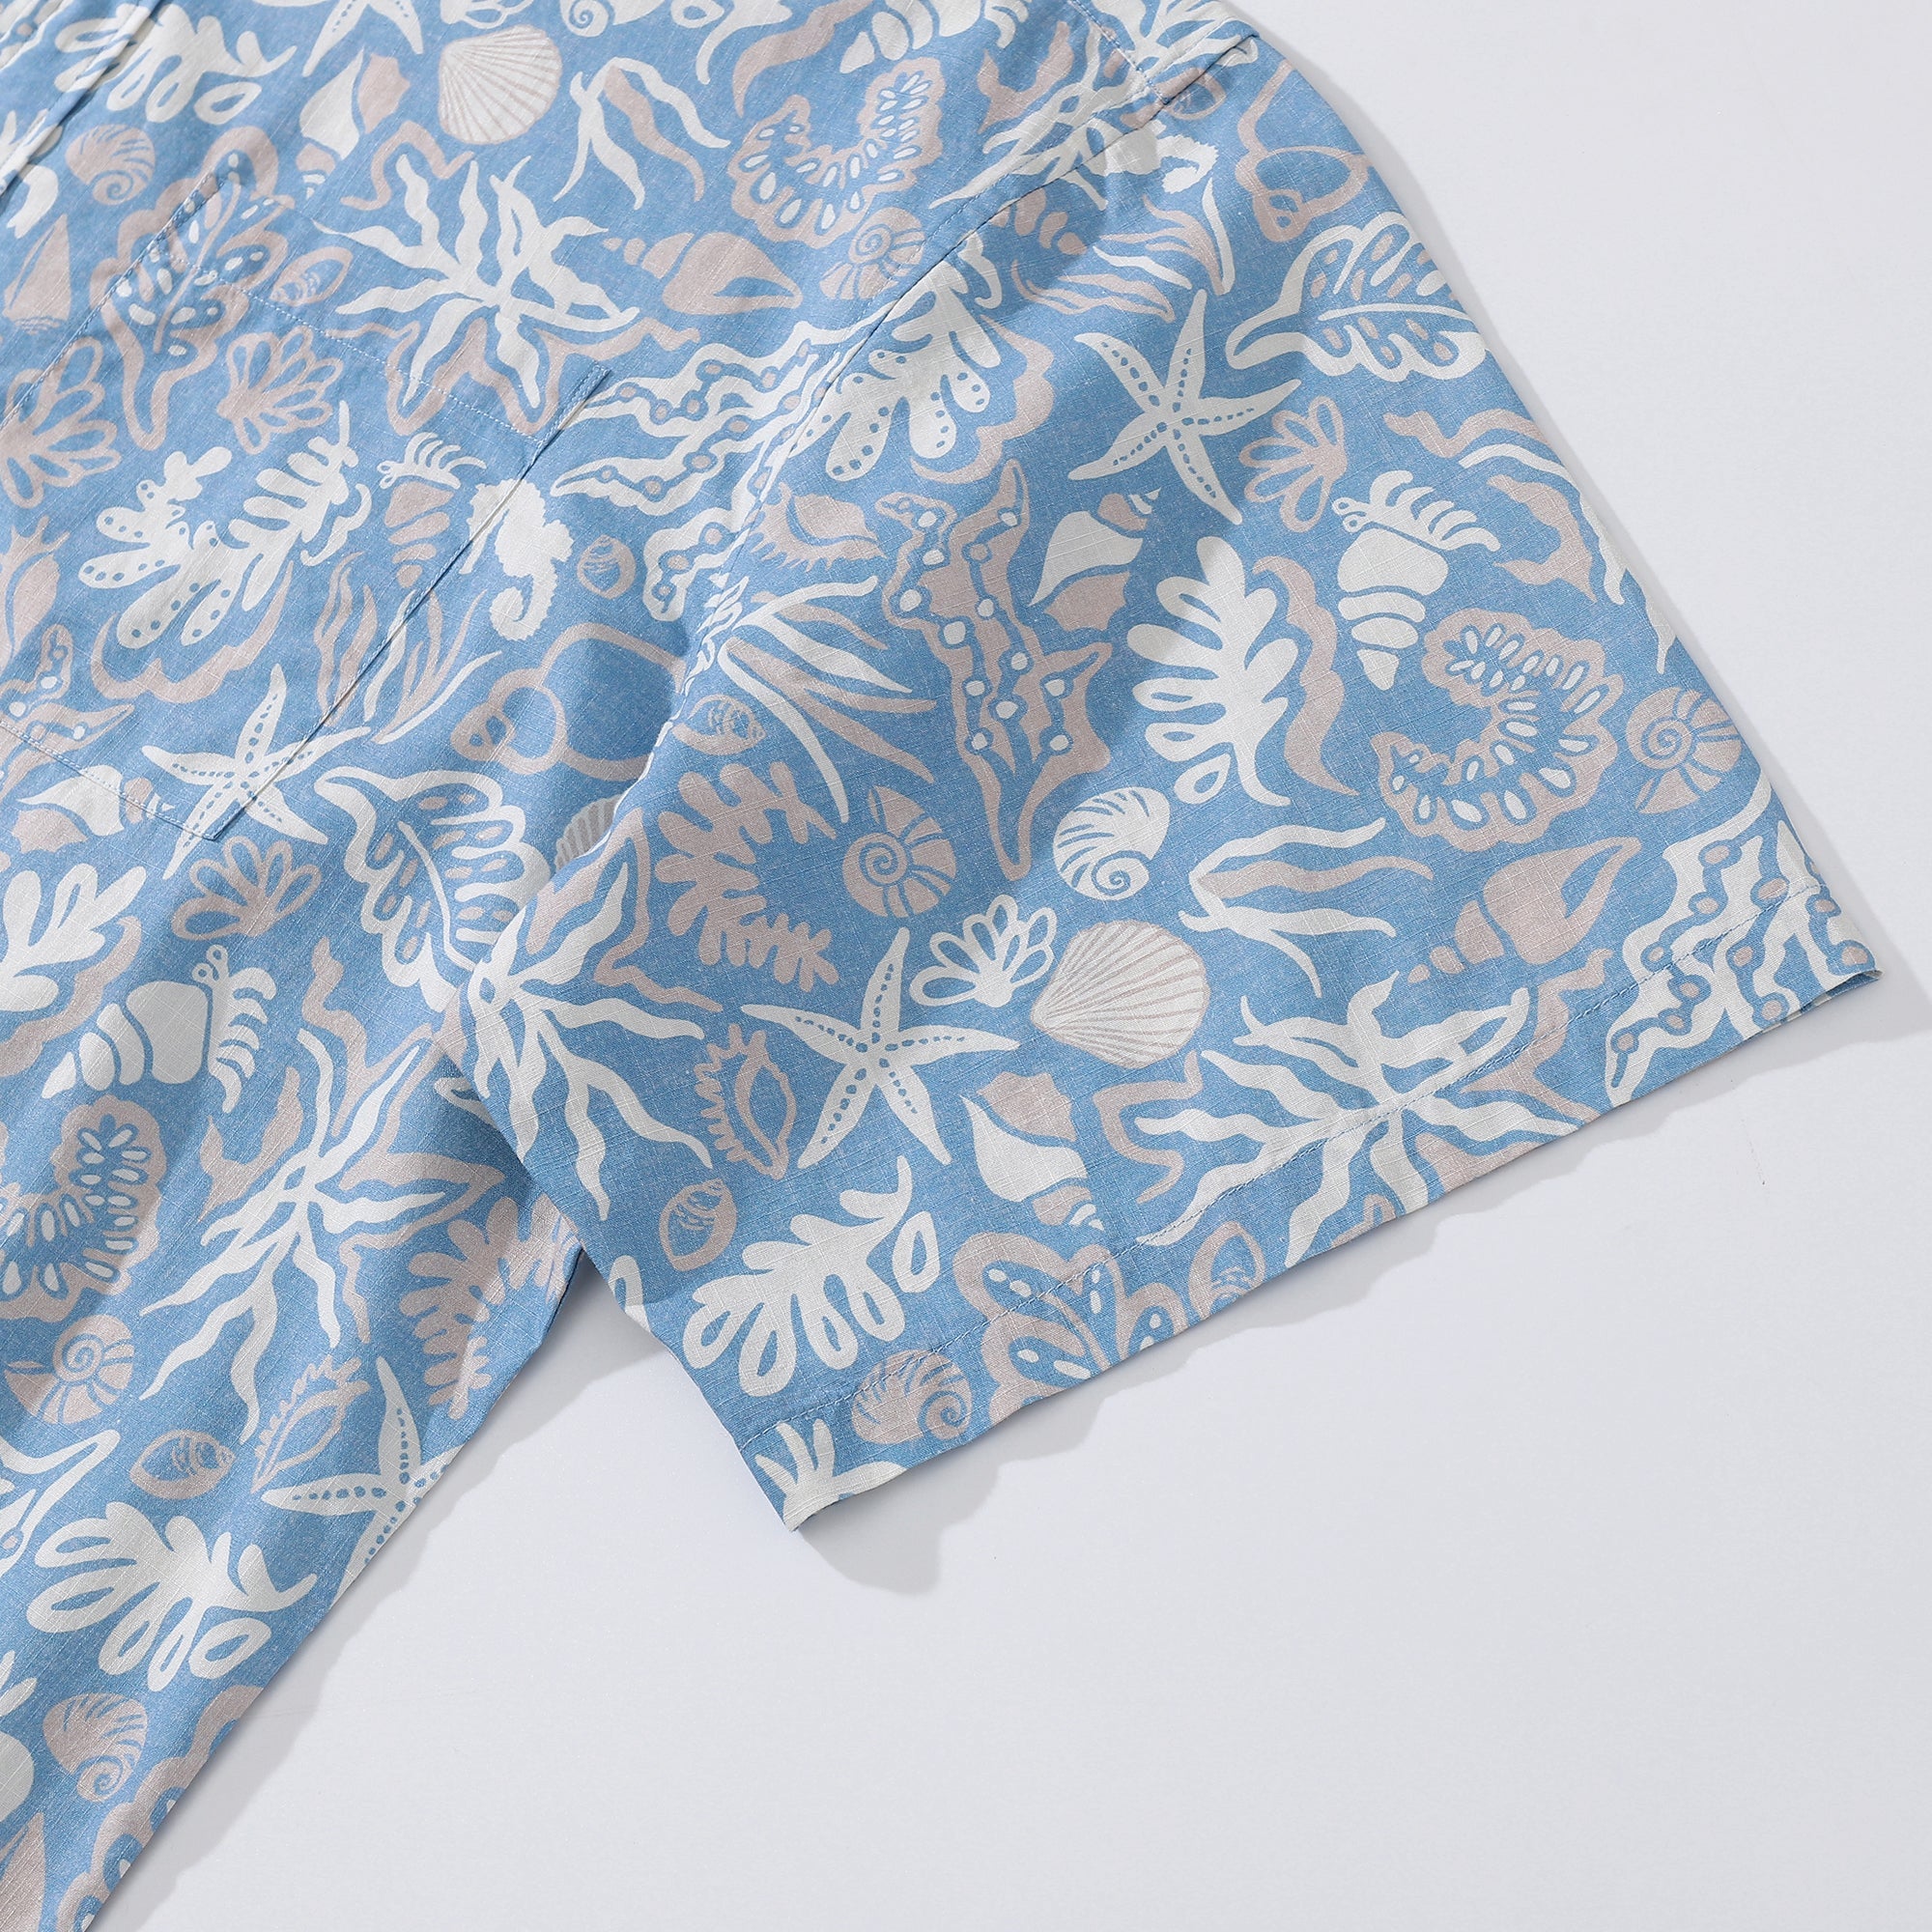 Cotton Hawaiian Shirts Australia for Men Oceanic Silhouette Print 100% Cotton Short-Sleeved - Blue